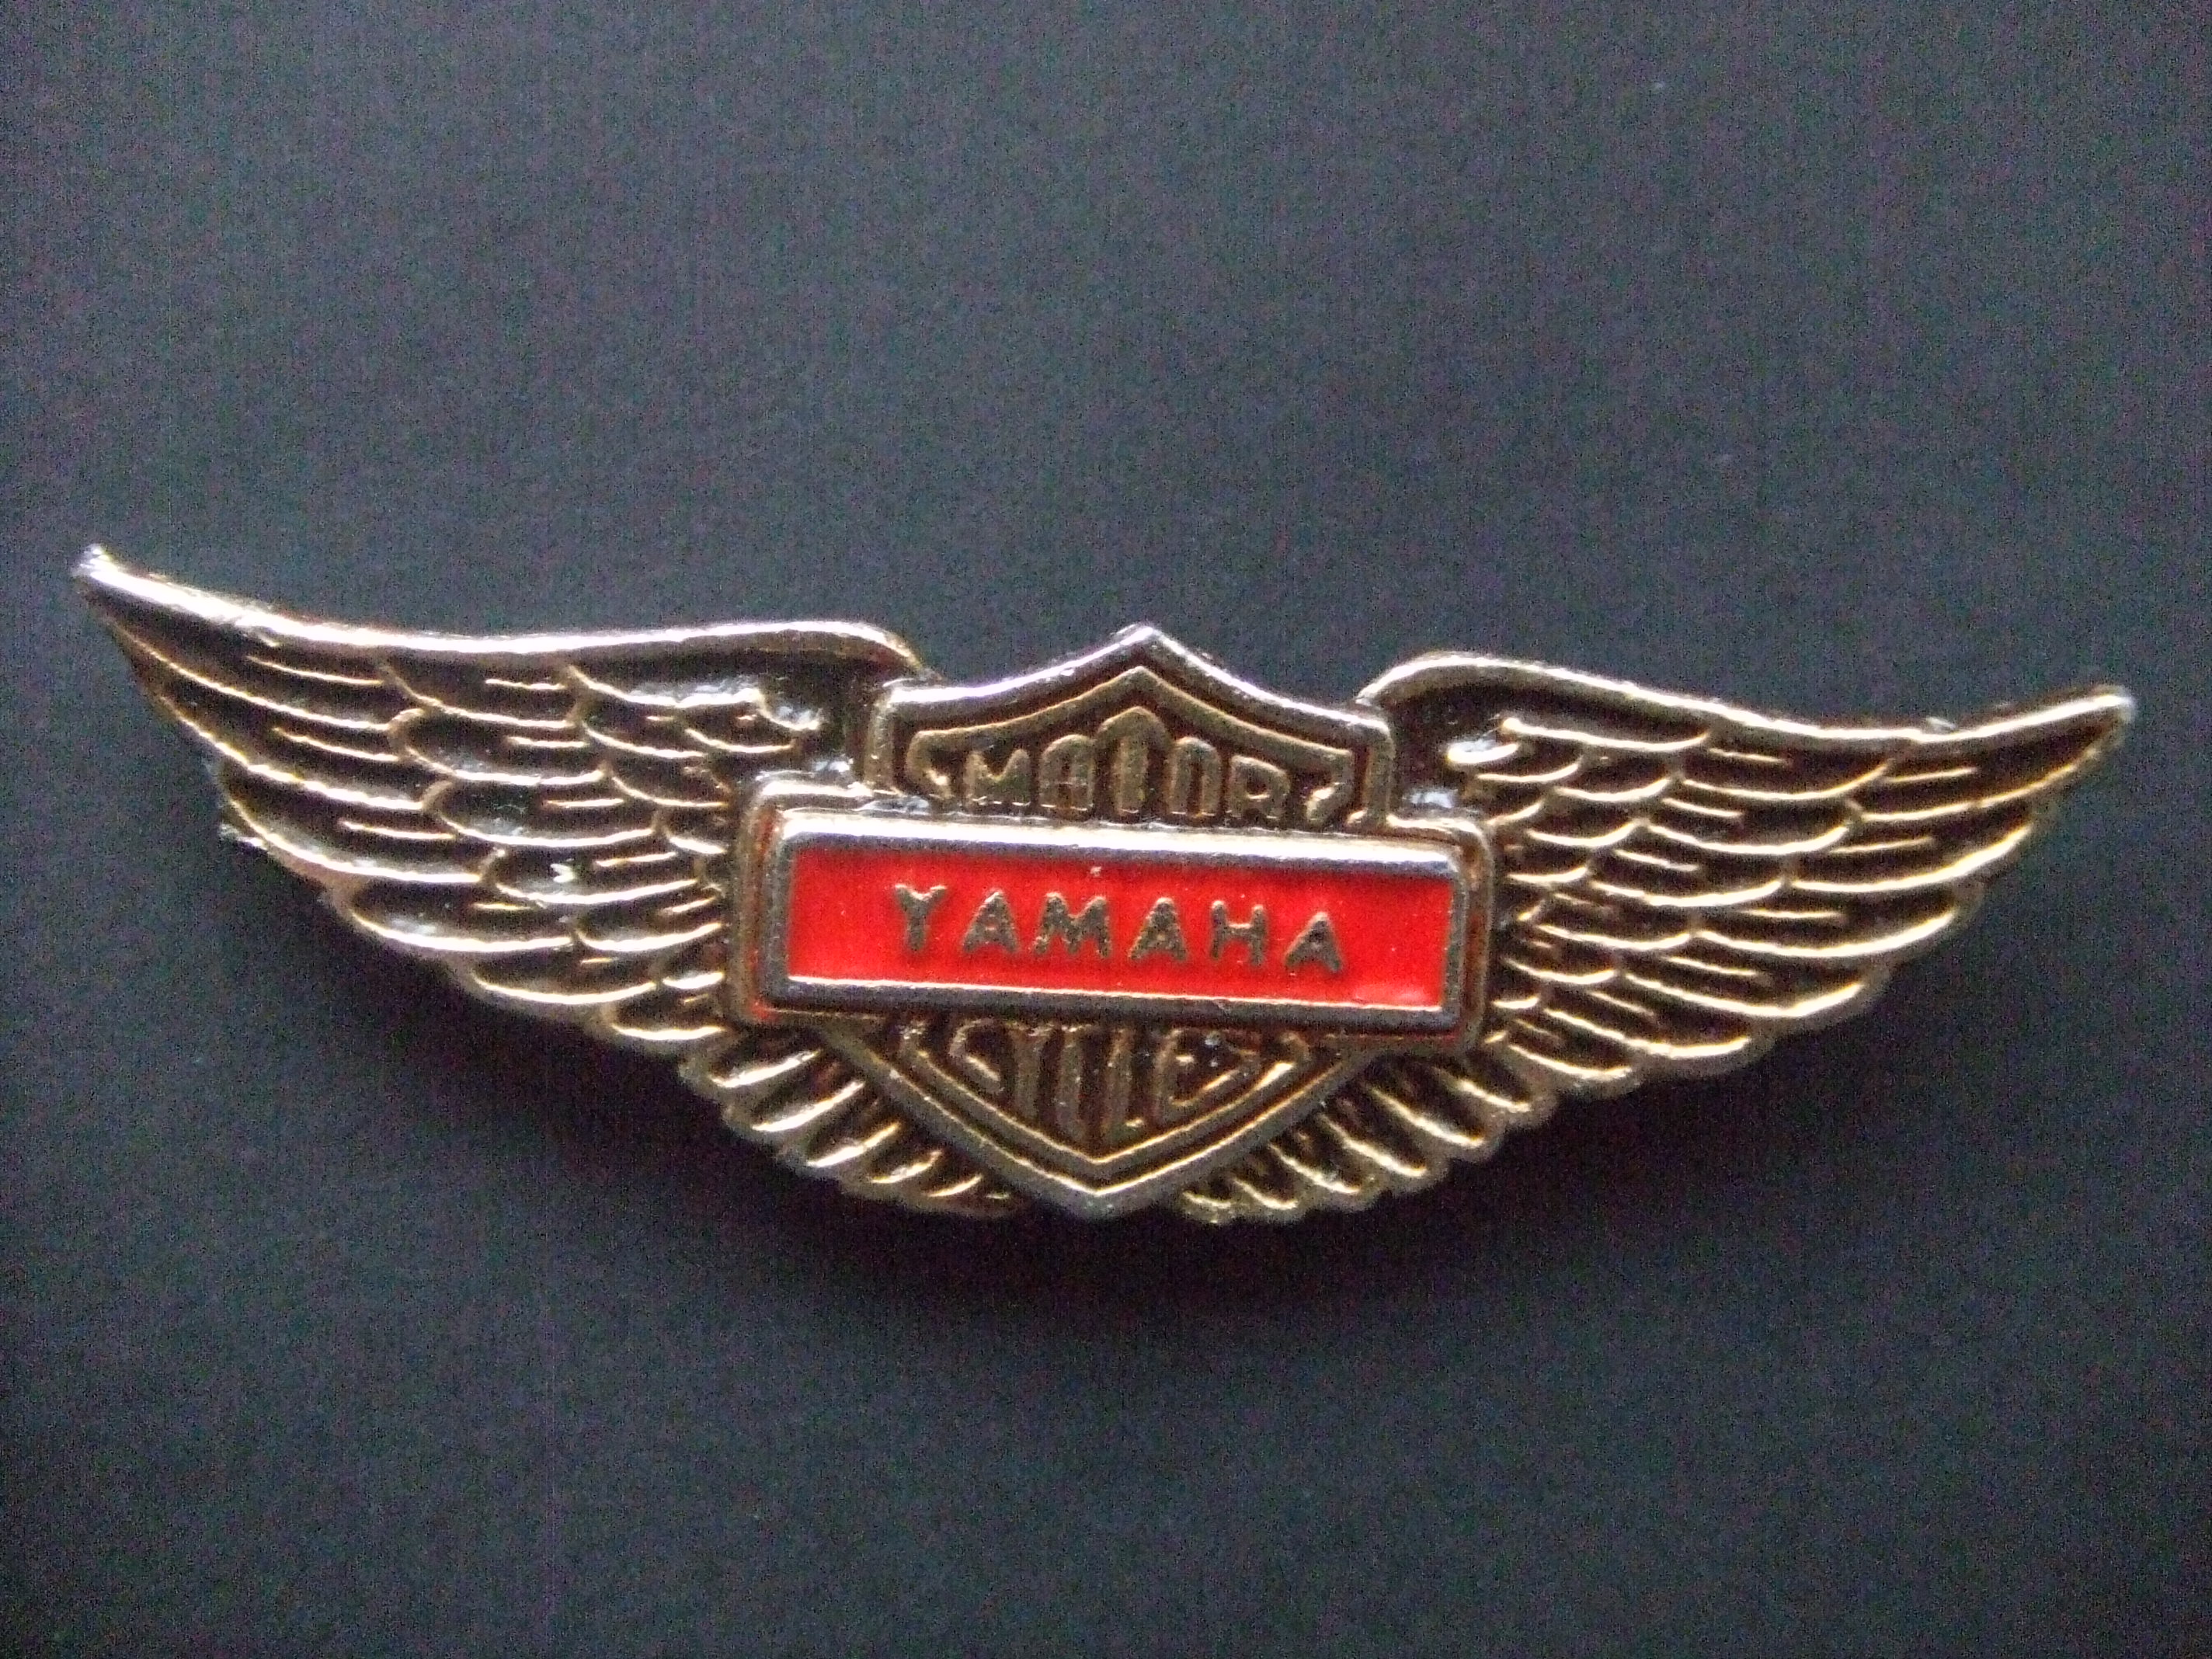 Yamaha Motor Wing logo